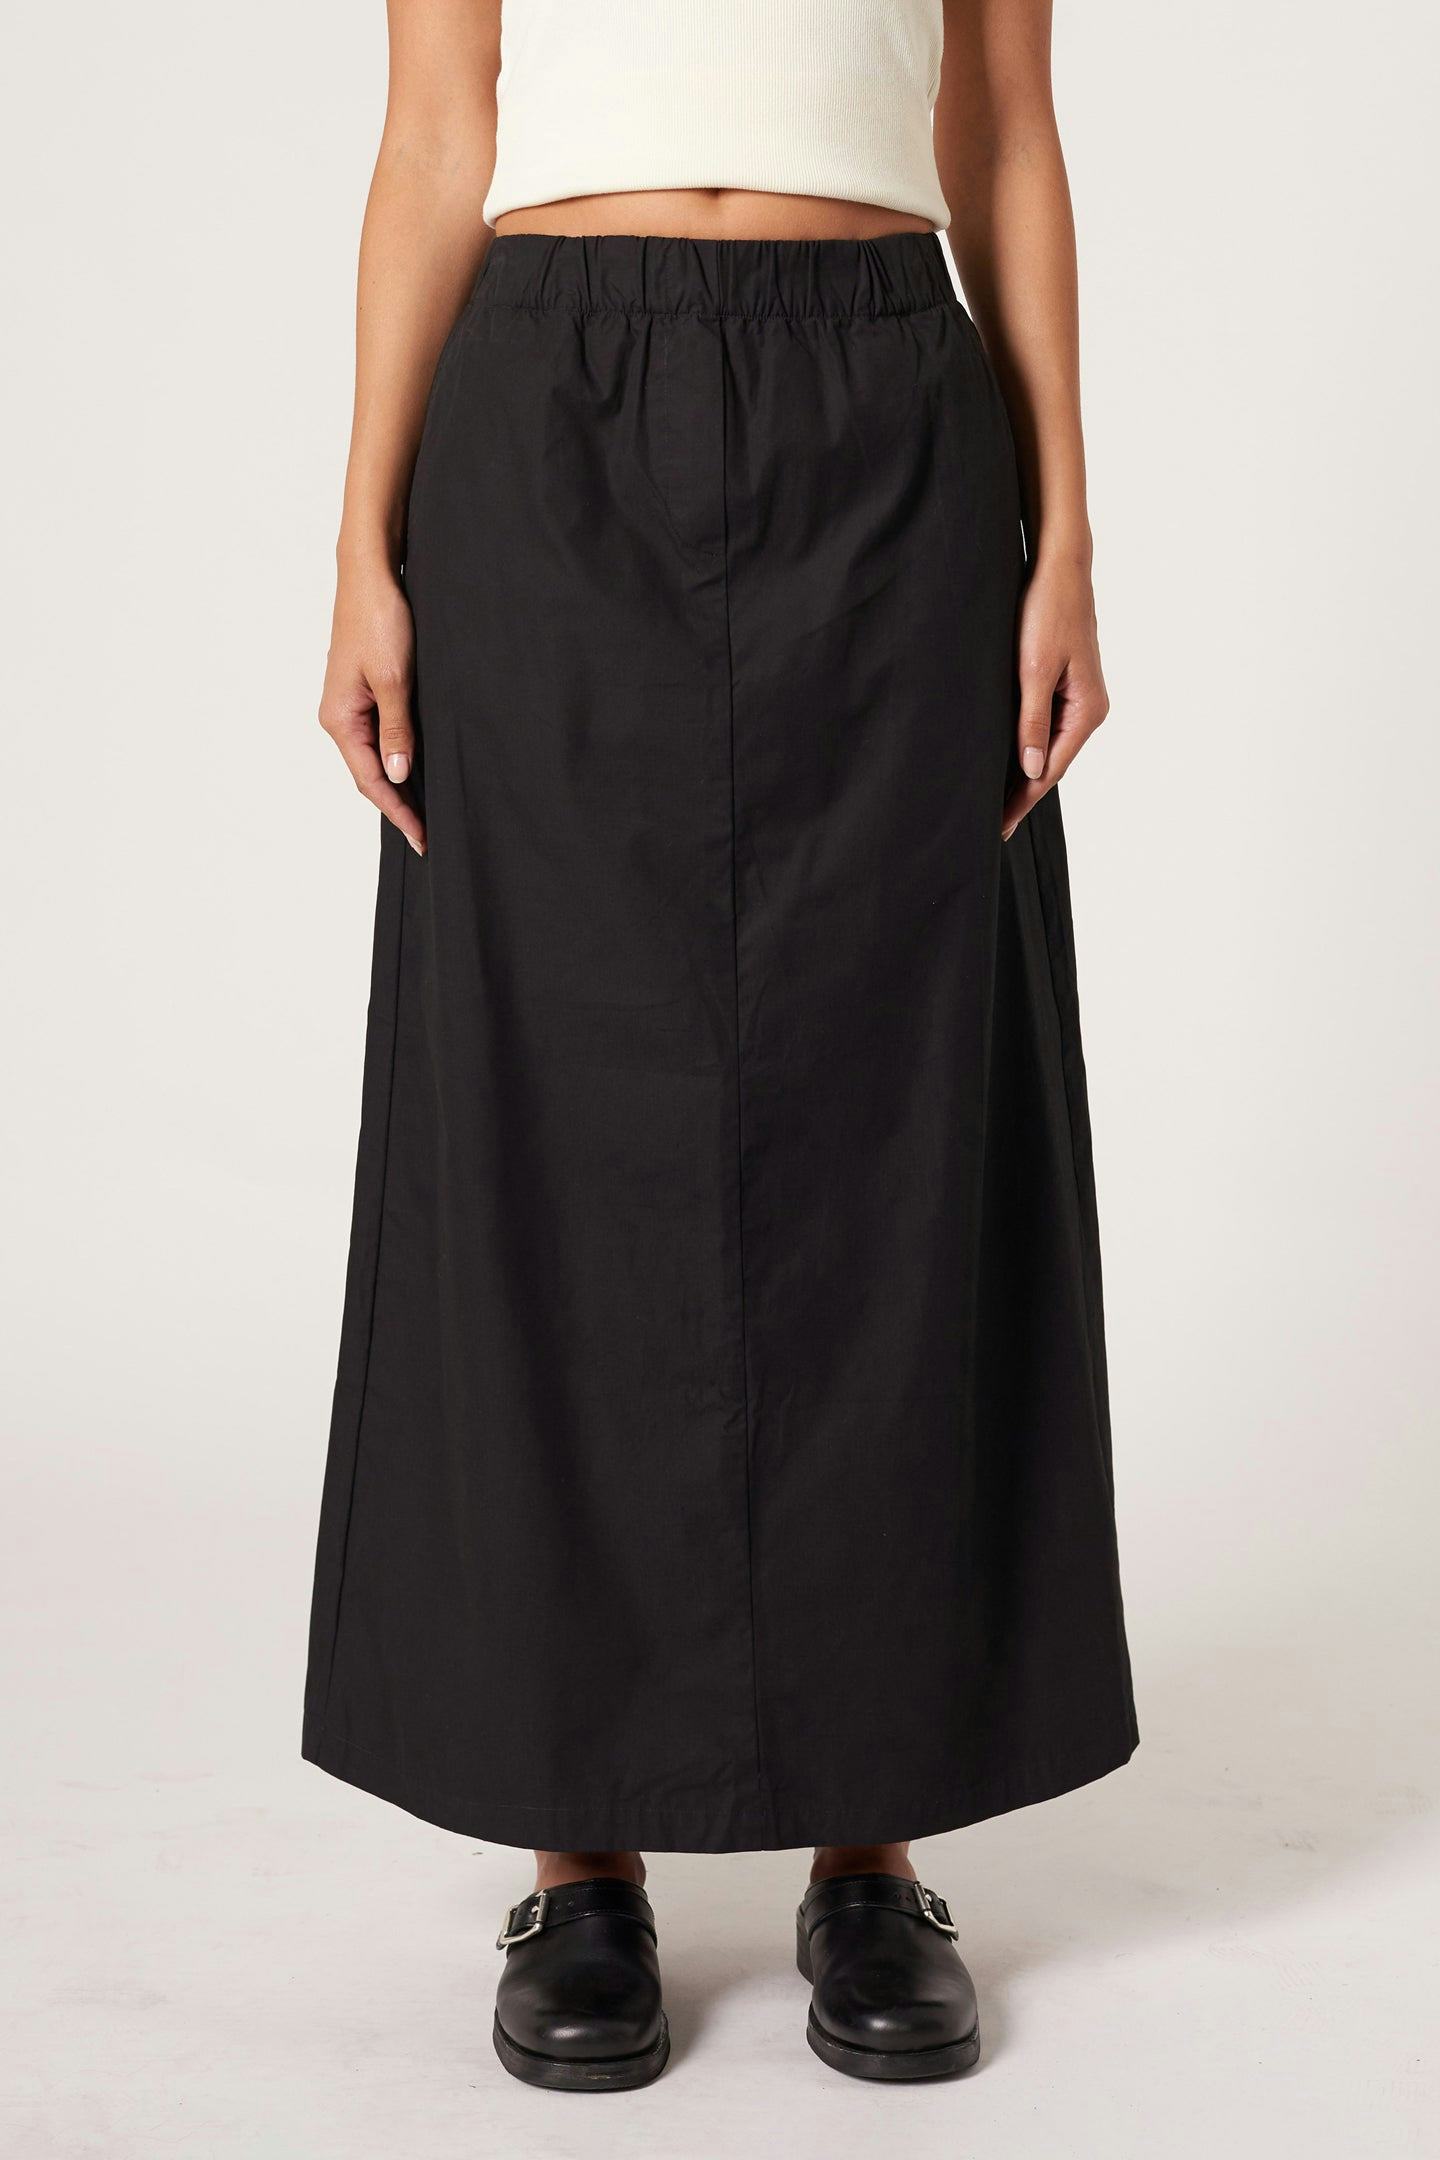 Barrett Skirt - Black Neuw maxi darkred womens-skirts 